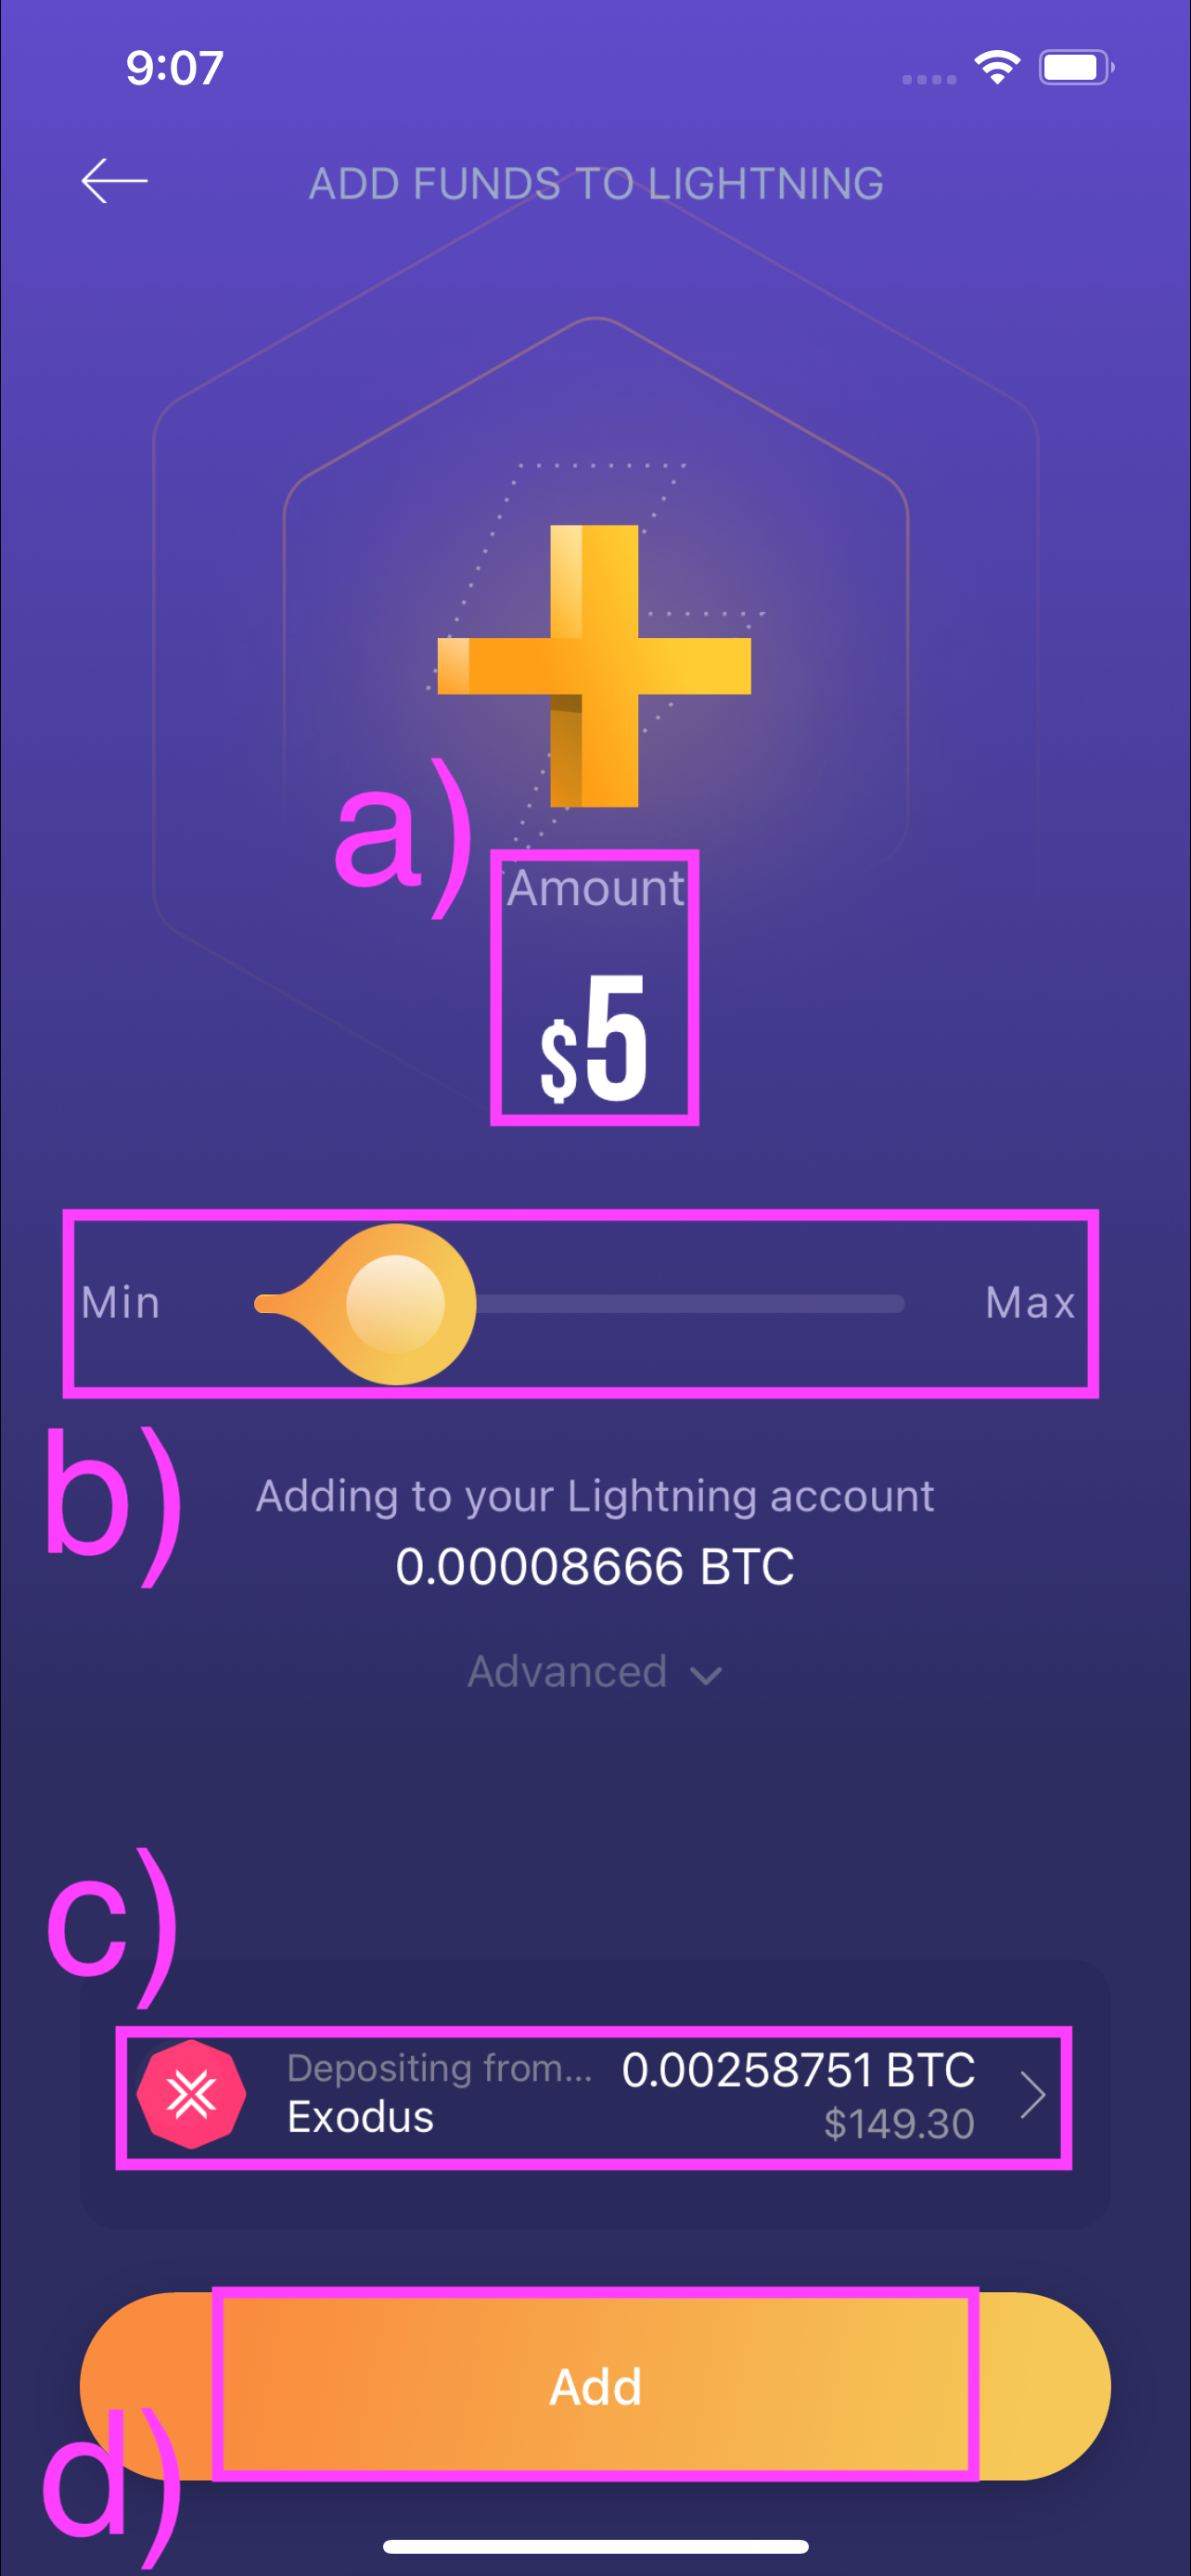 Exodus Wallet voegt Lightning Network toe aan mobiele app